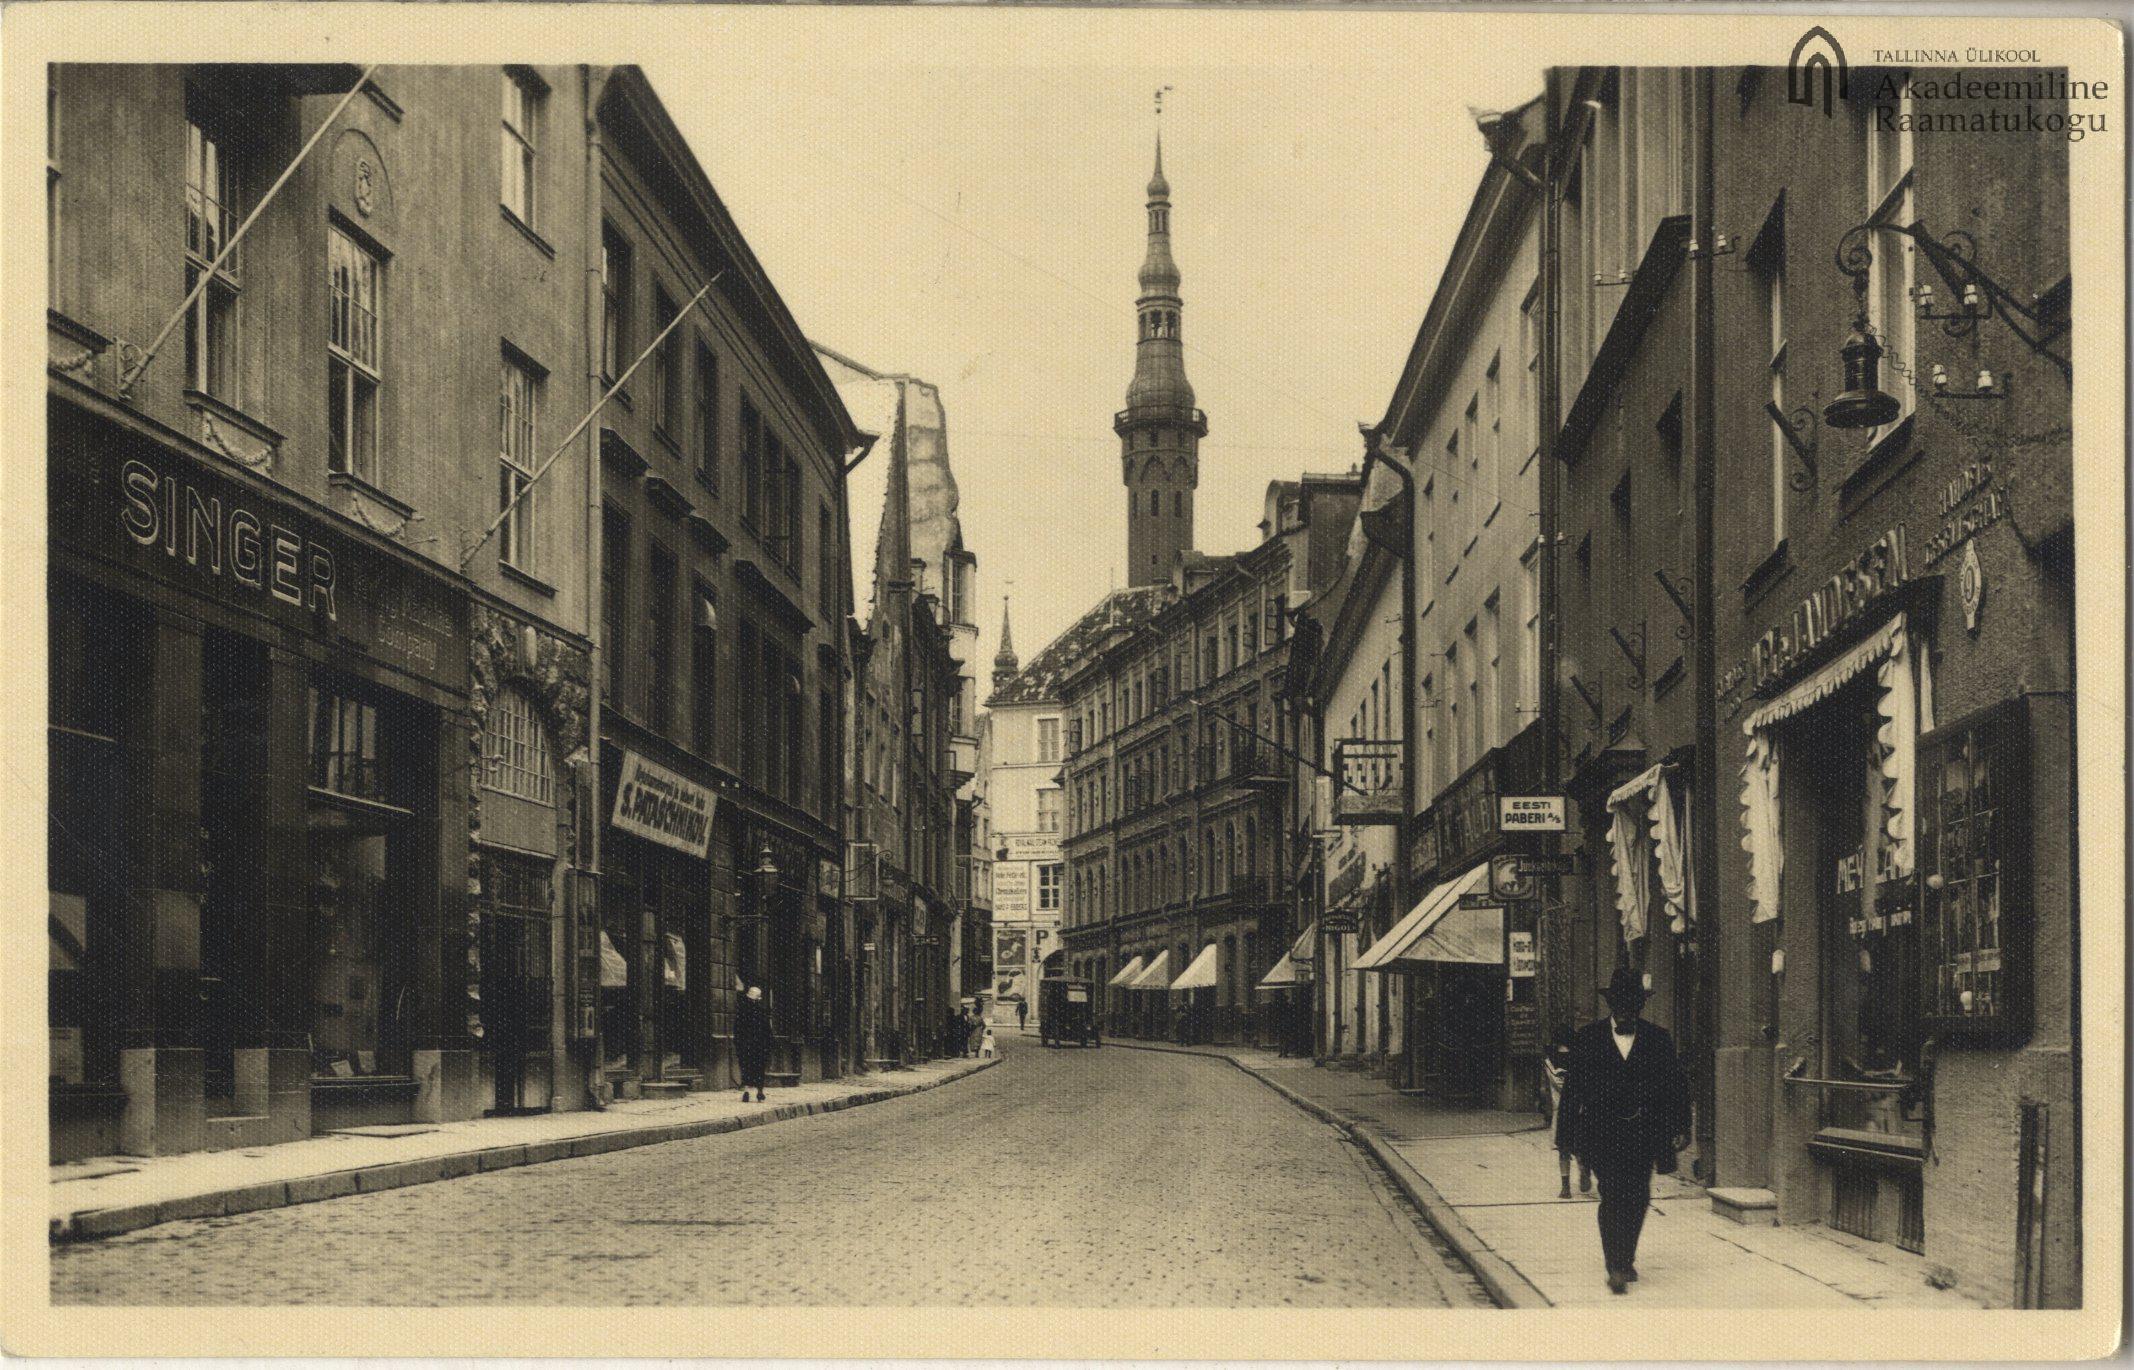 Tallinn. Viru Street